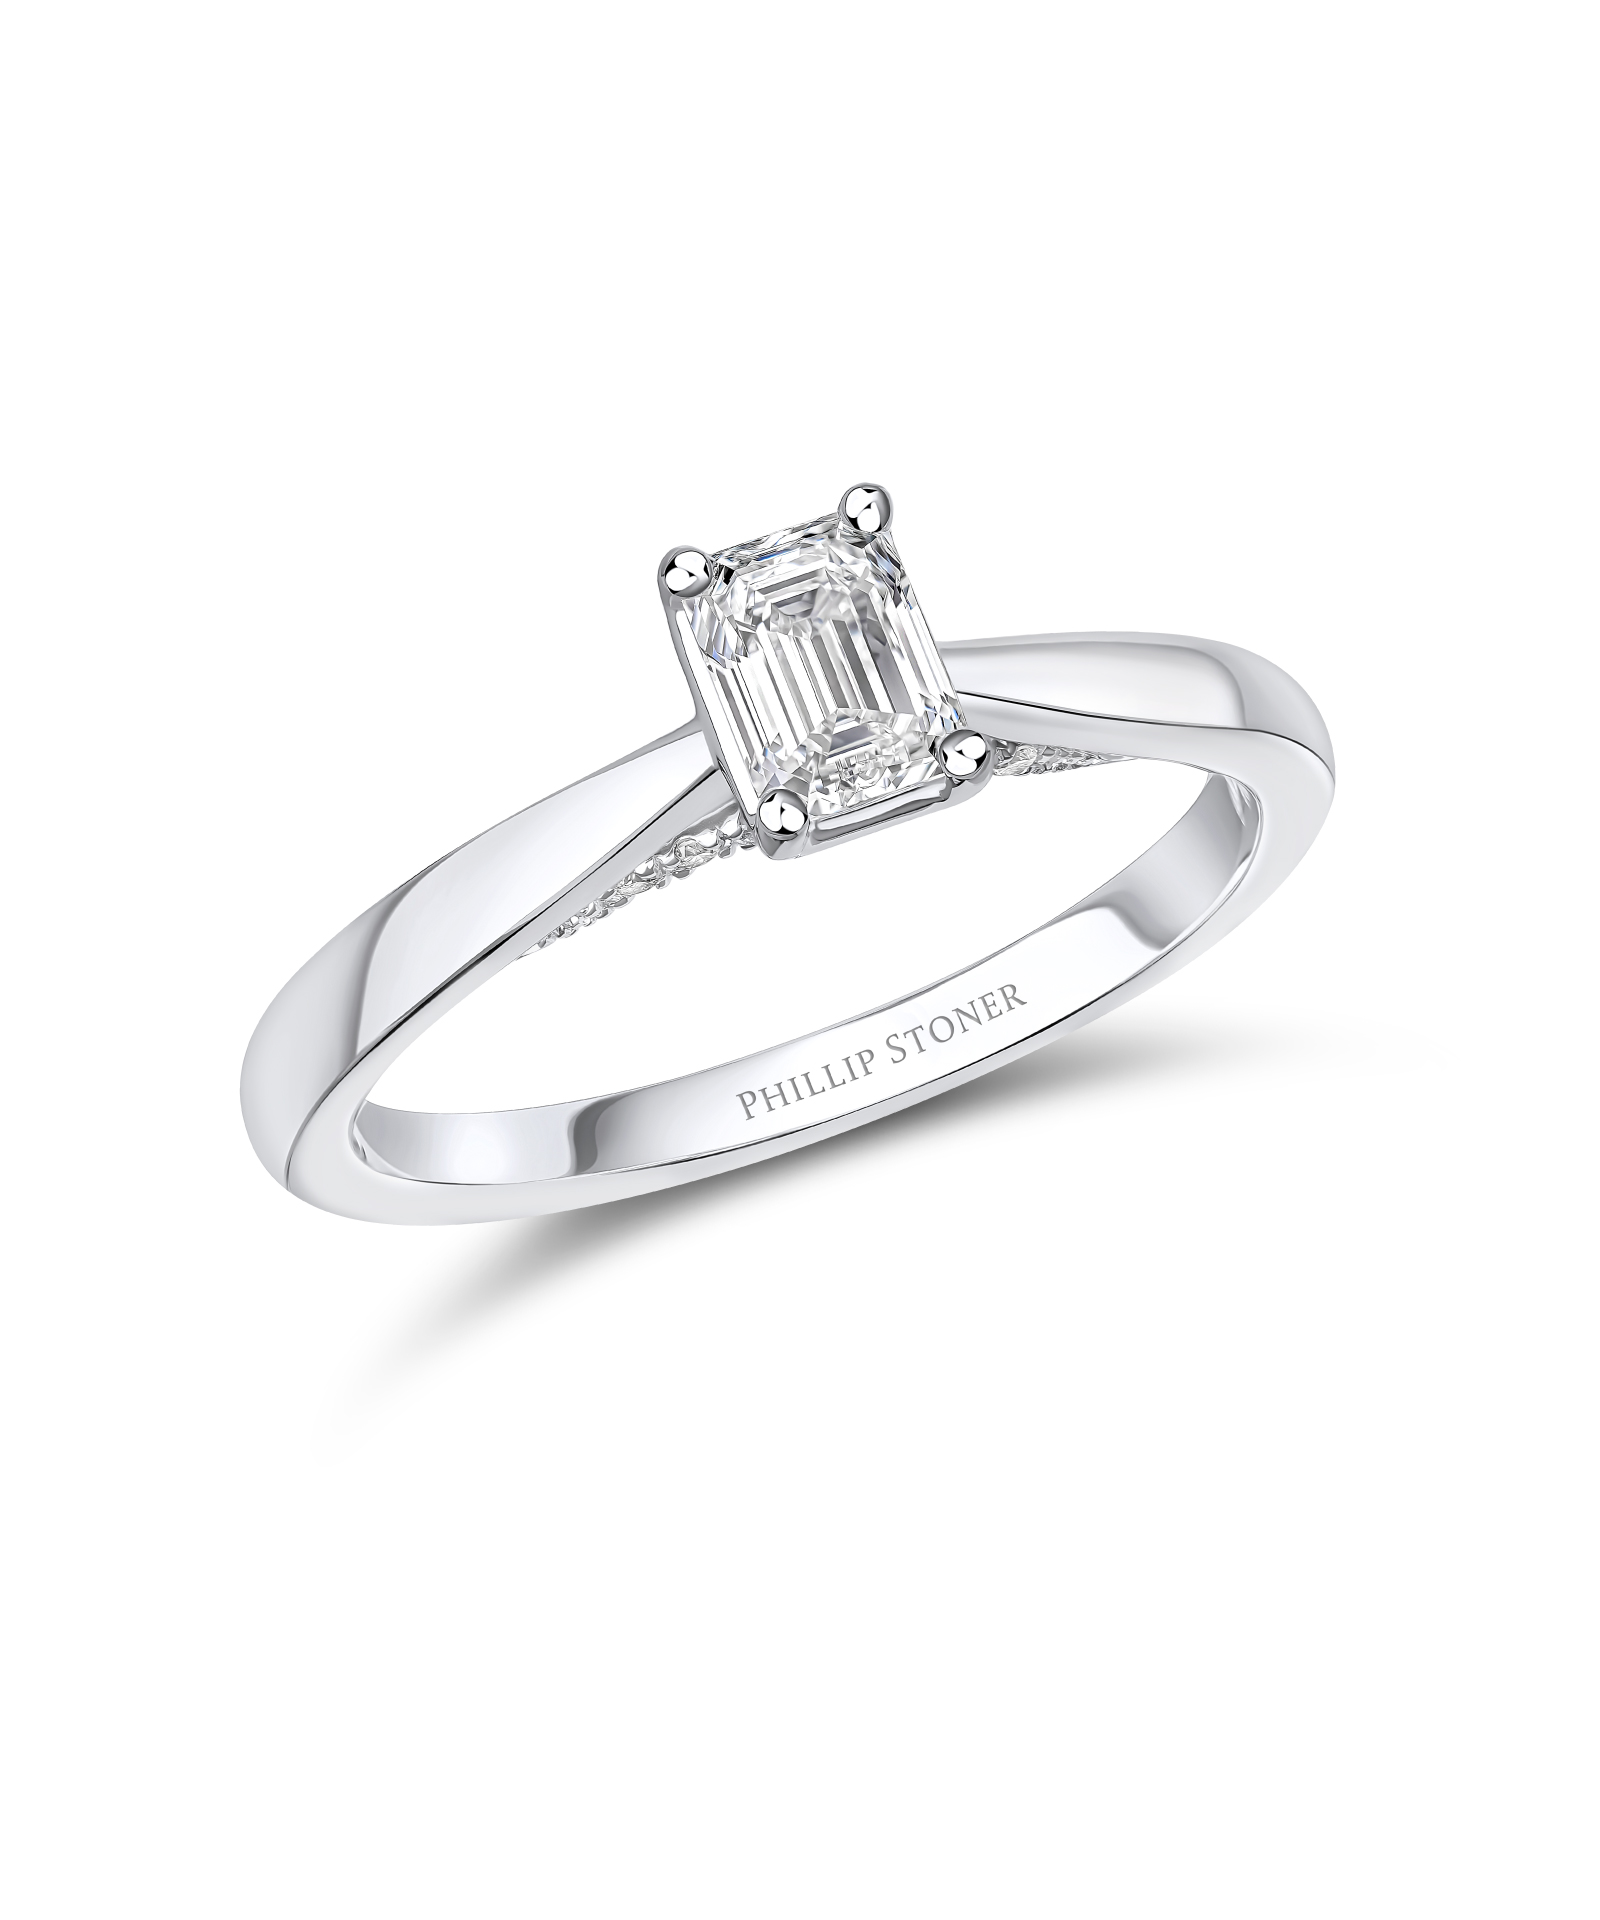 0.50ct Emerald Cut Diamond Engagement Ring with Diamond Under Bezel - Phillip Stoner The Jeweller